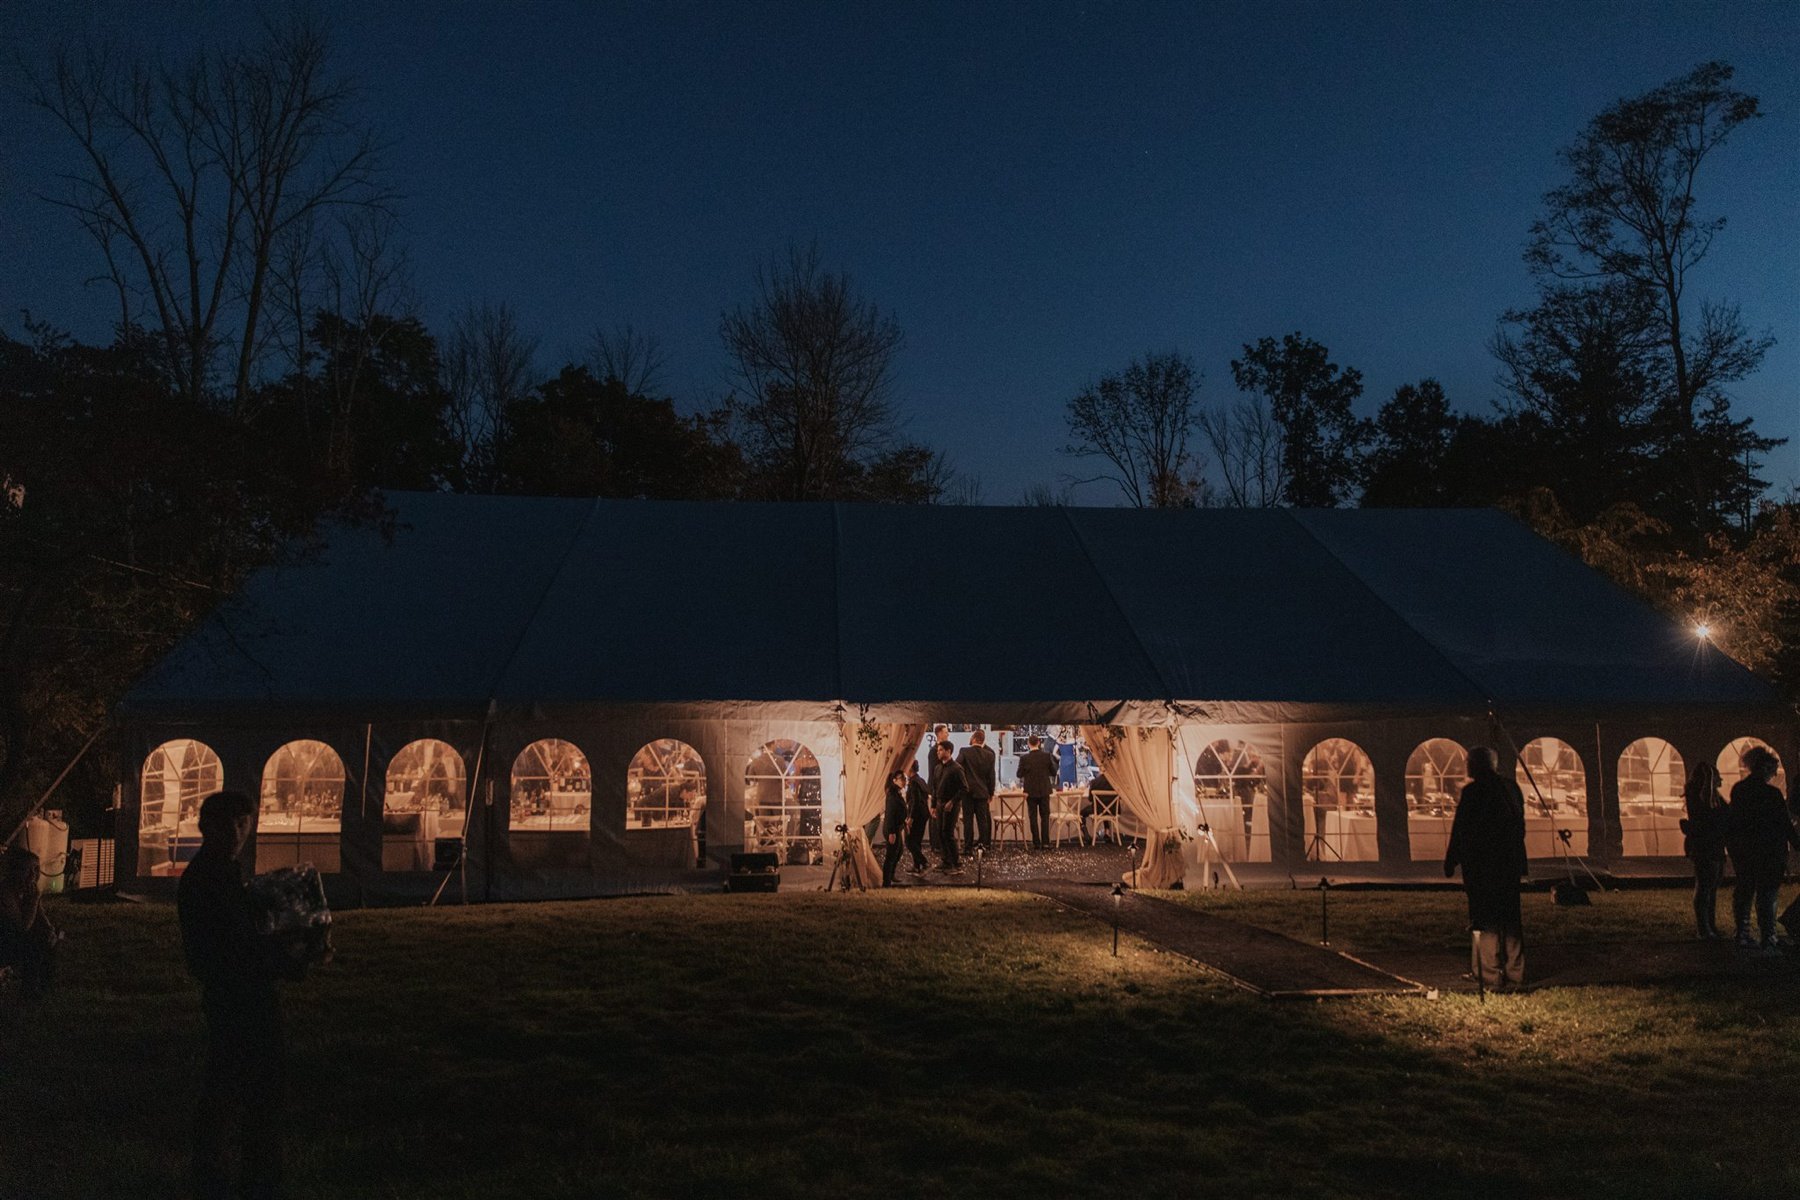 Tented backyard wedding reception